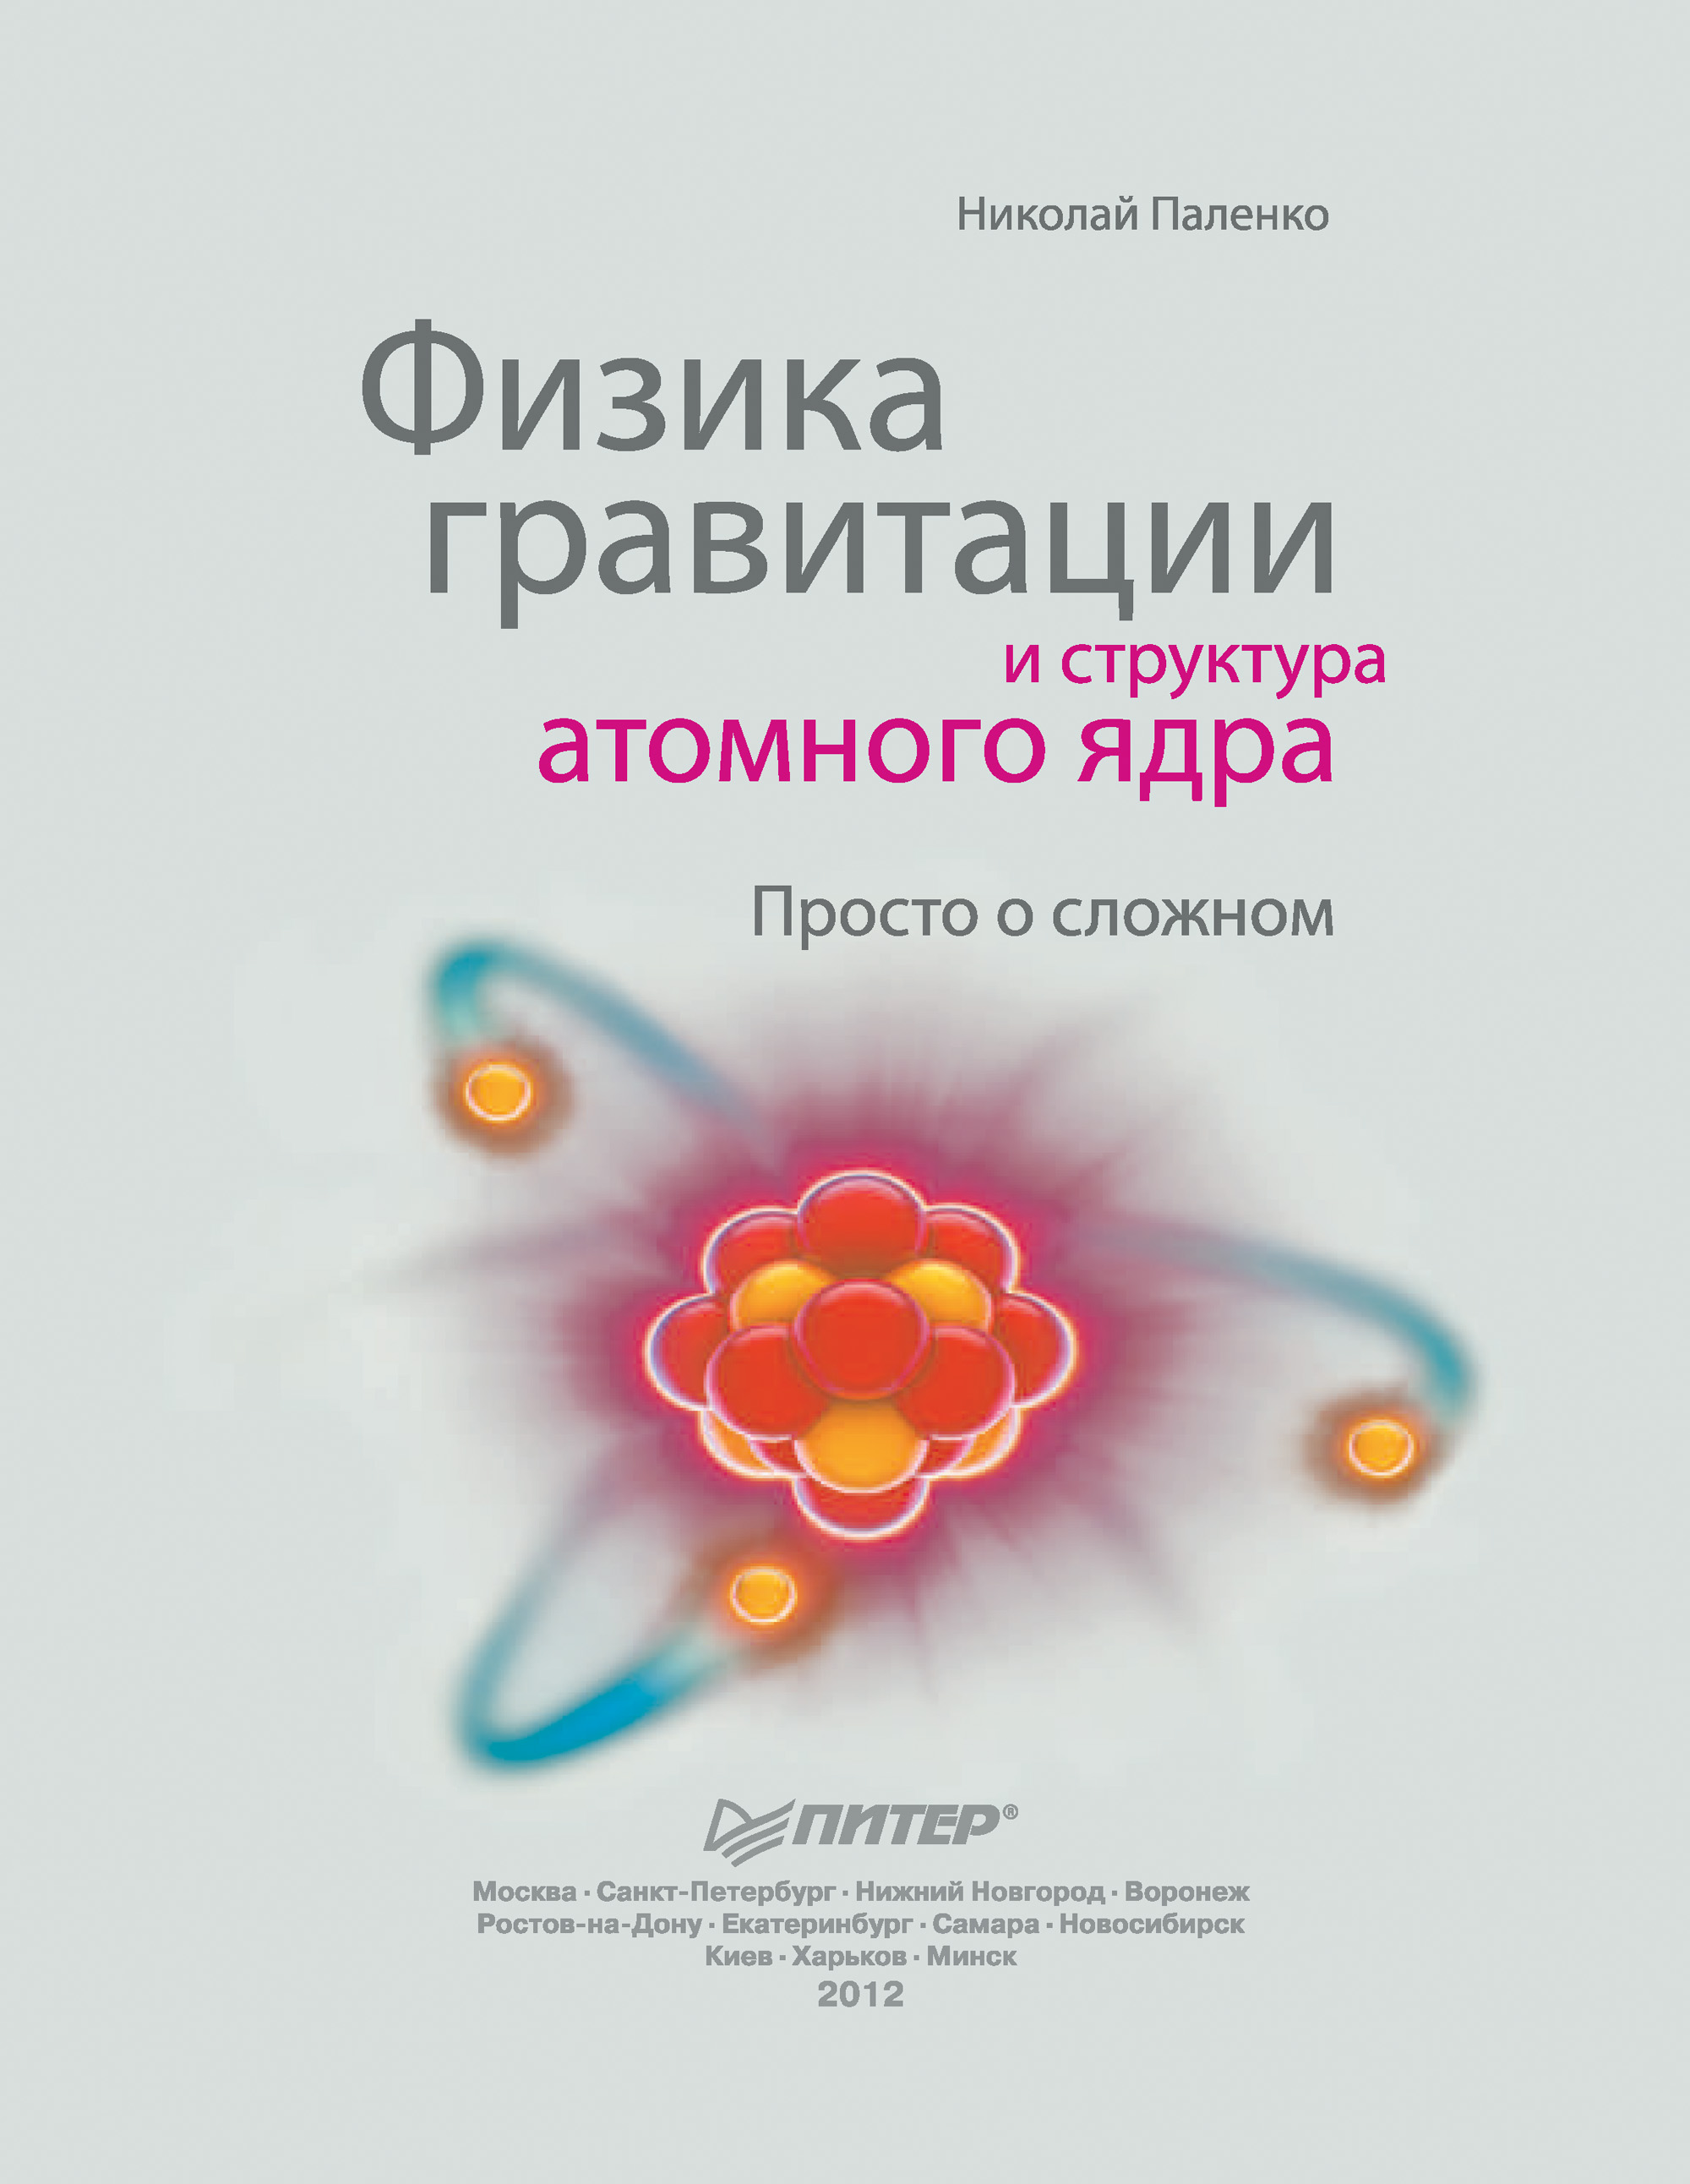 Николай Паленко «Физика гравитации и структура атомного ядра. Просто о сложном»